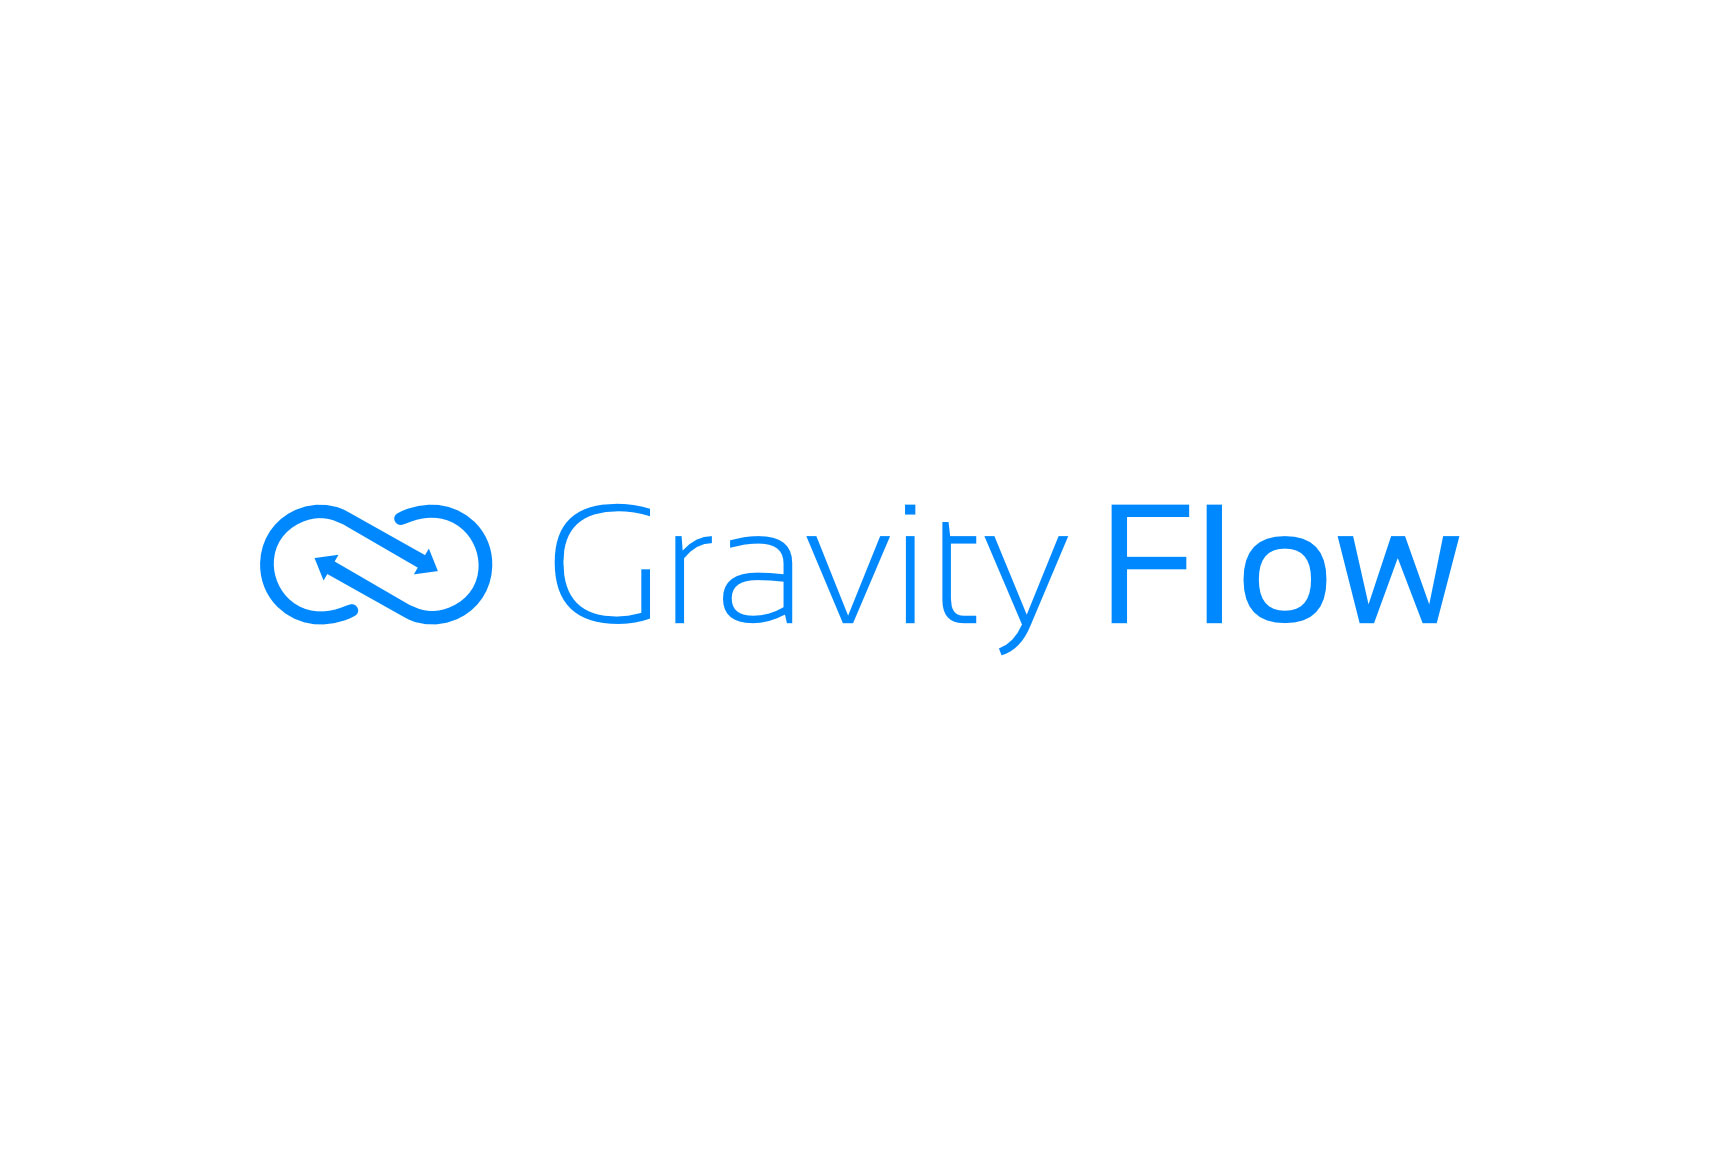 Gravity Flow masthead image